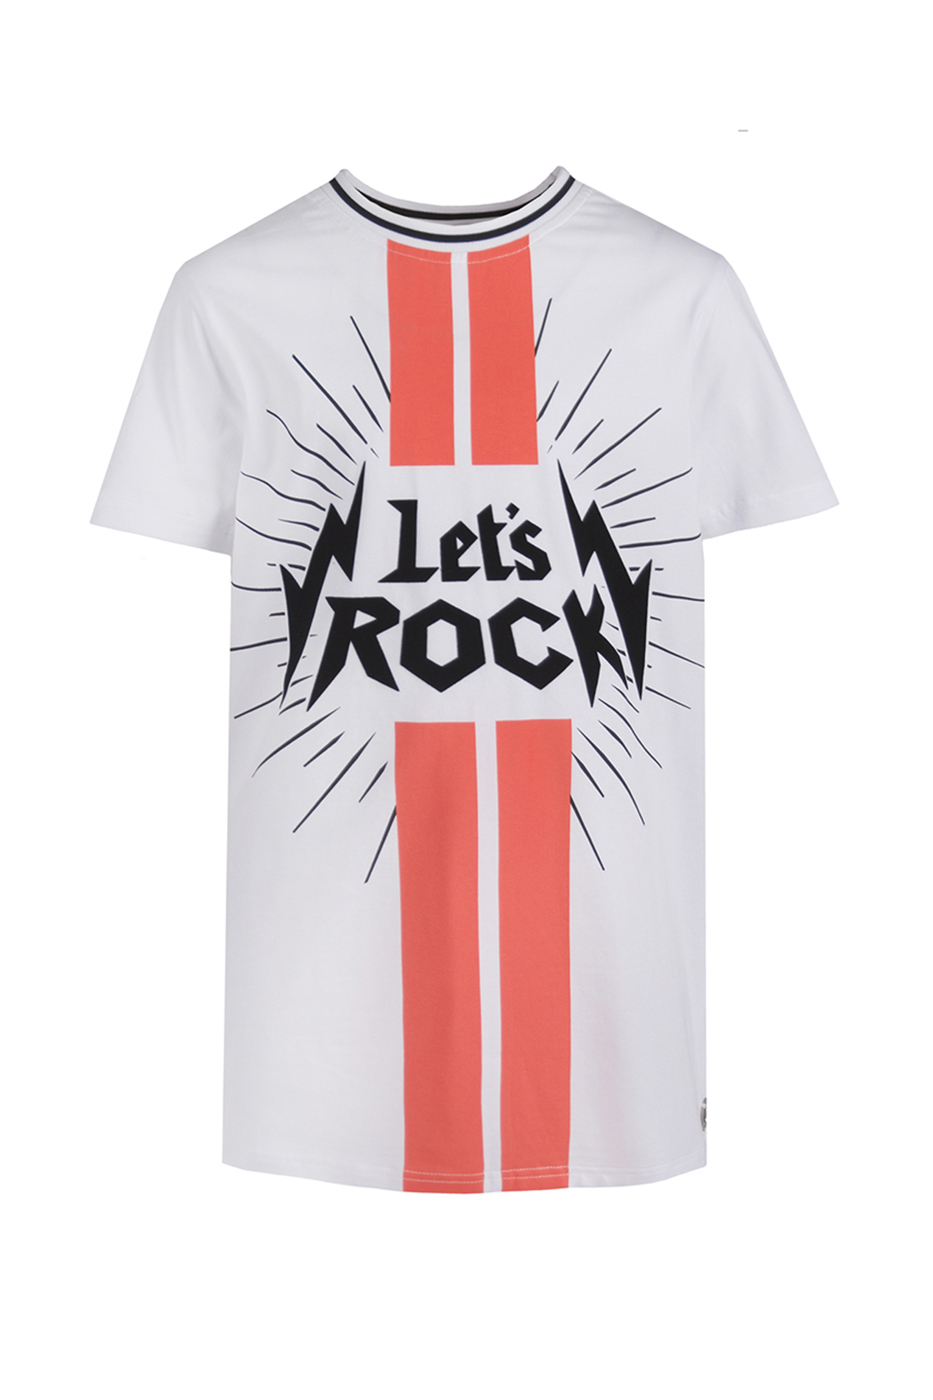 Camiseta Rock